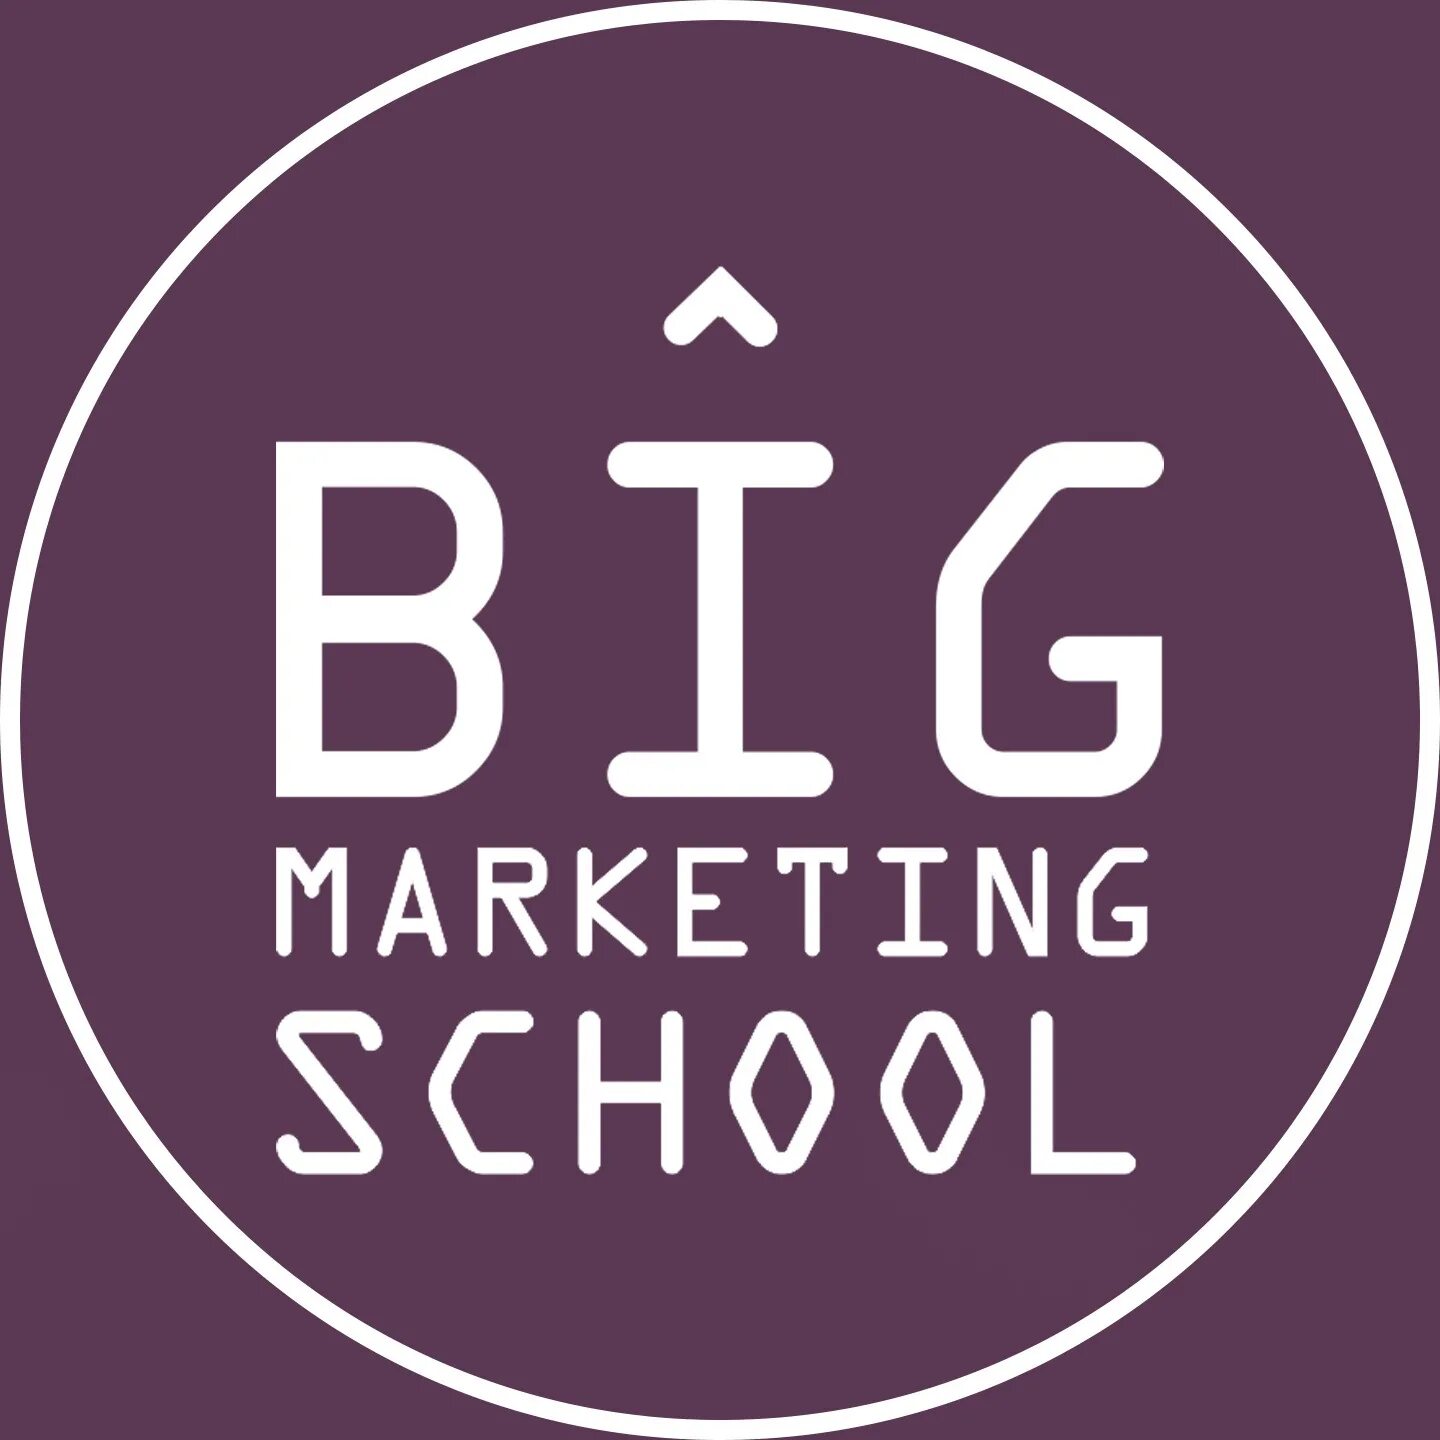 Your school big. Биг Маркет. Школа маркетинга. Компания big. Big marketing School.